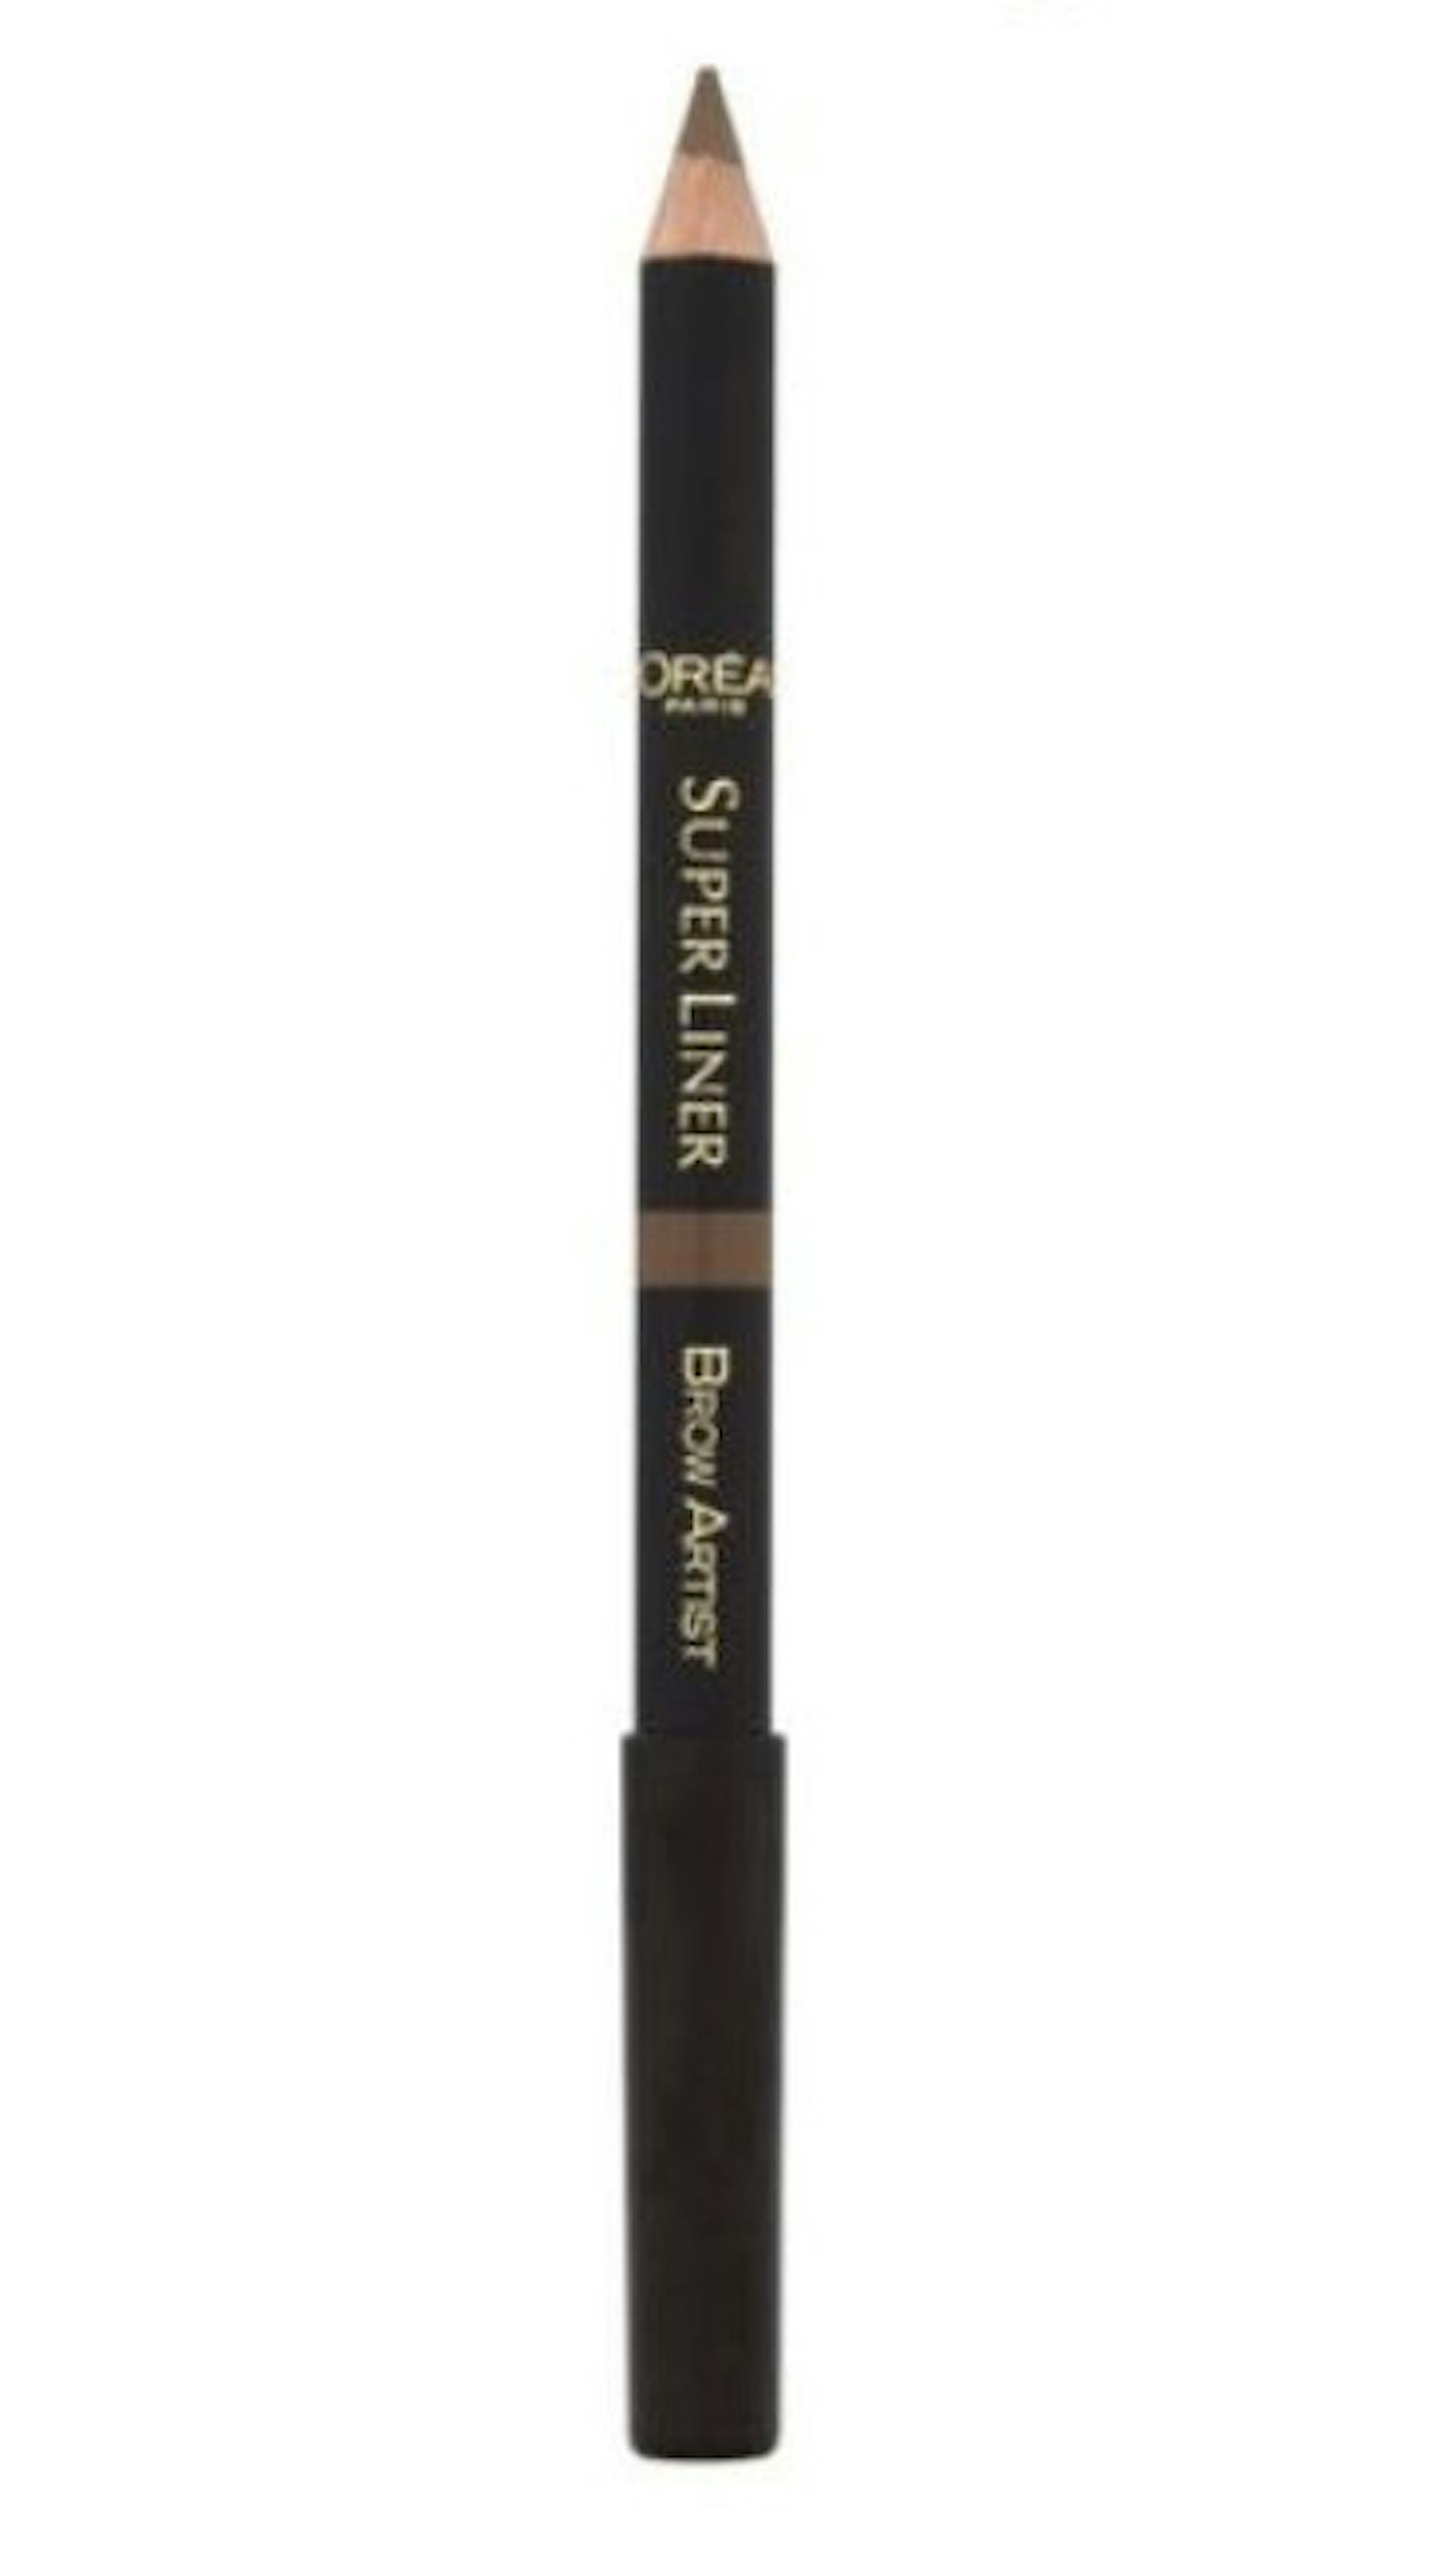 L'Oreal Brow Artiste Pencil 5.49